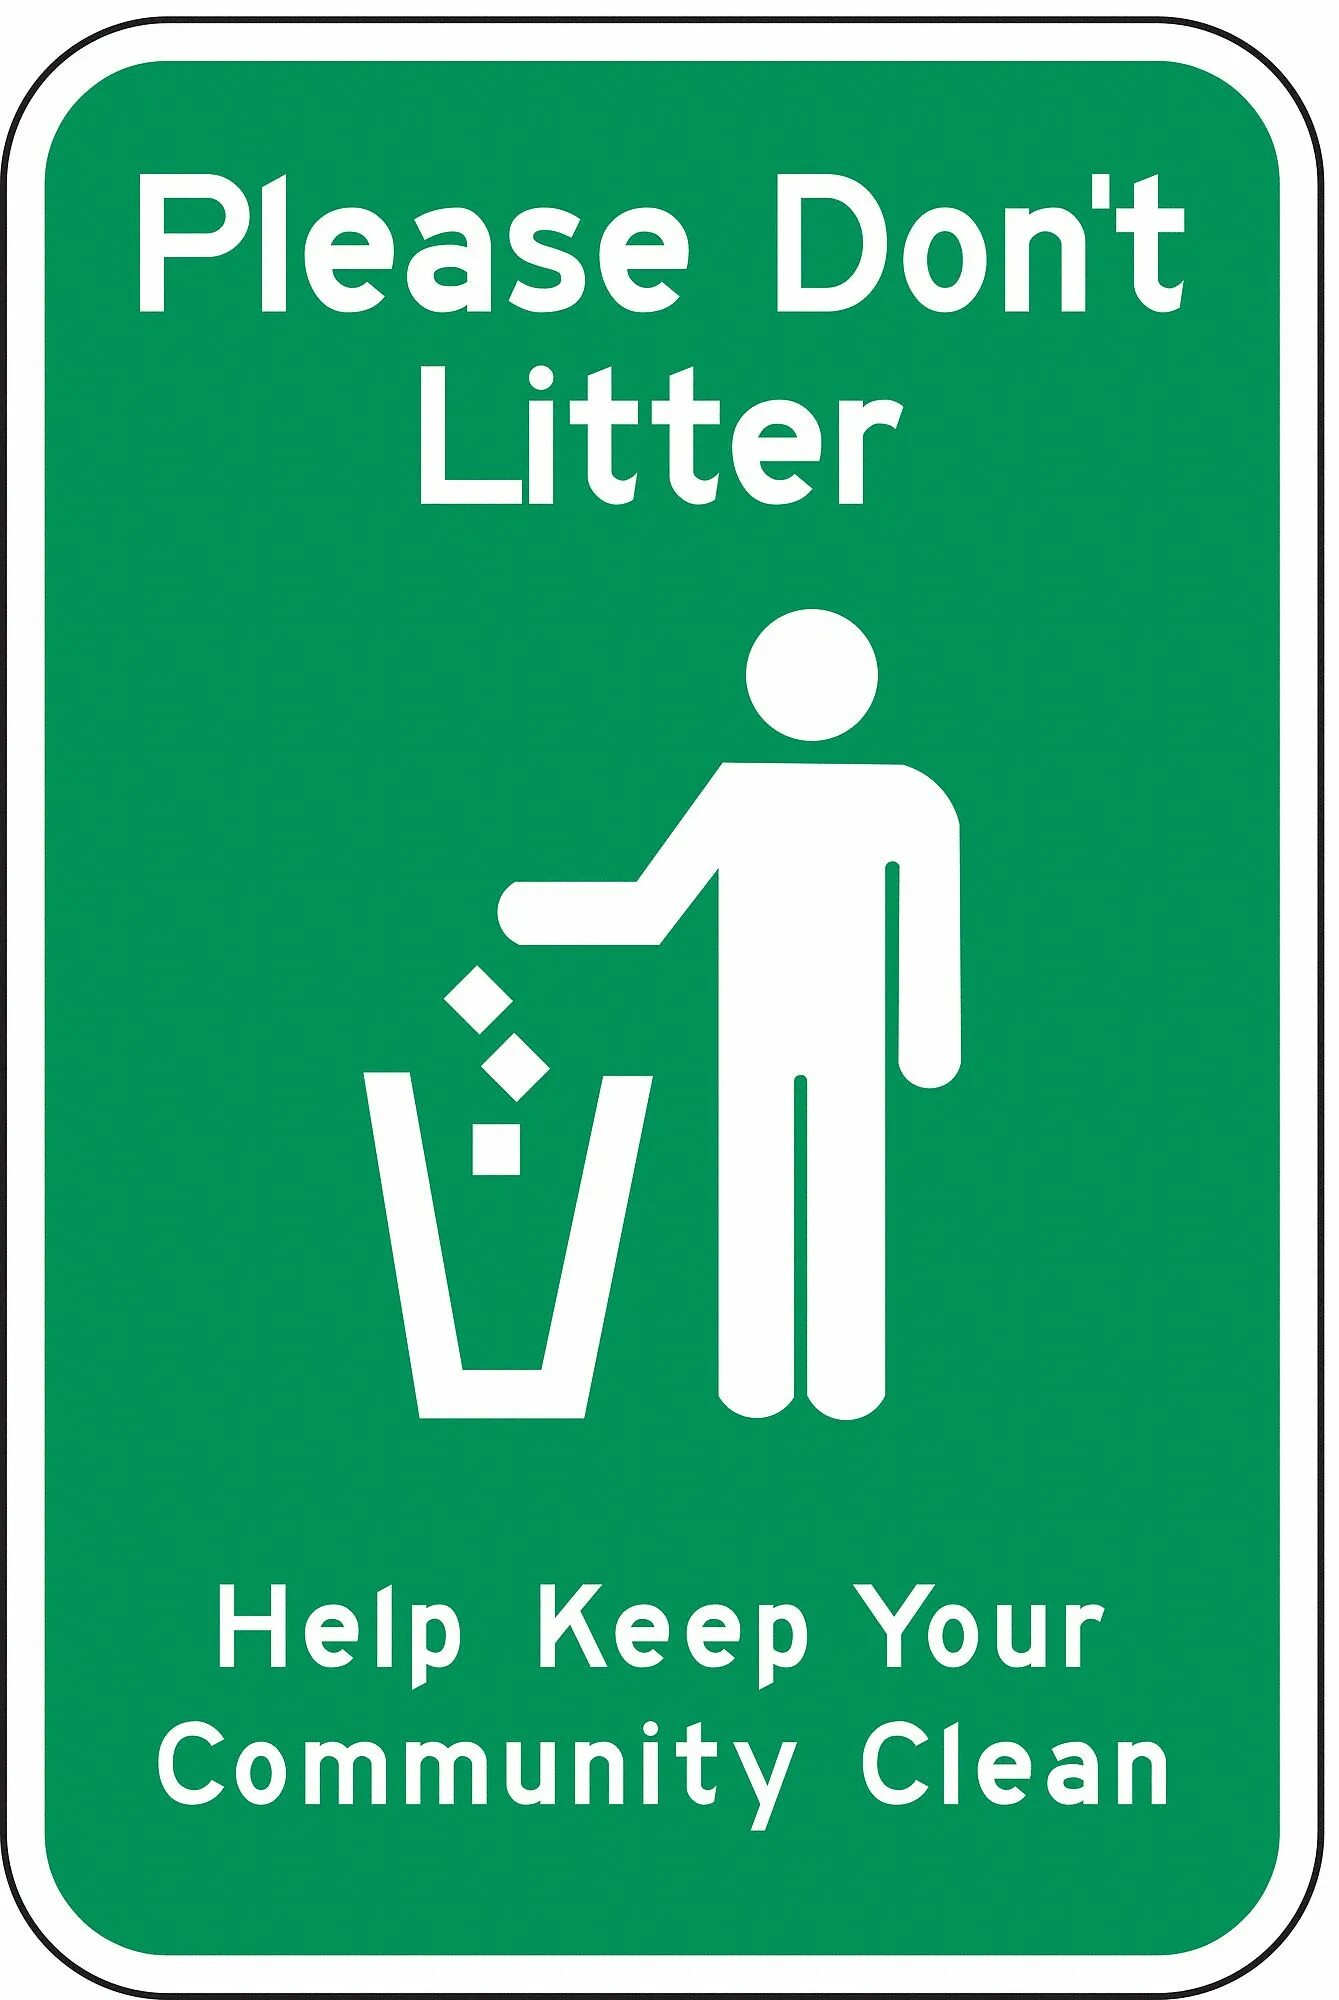 Don't Litter. Please don't Litter. Do not Litter. Don't Litter sign. Please do not disclose